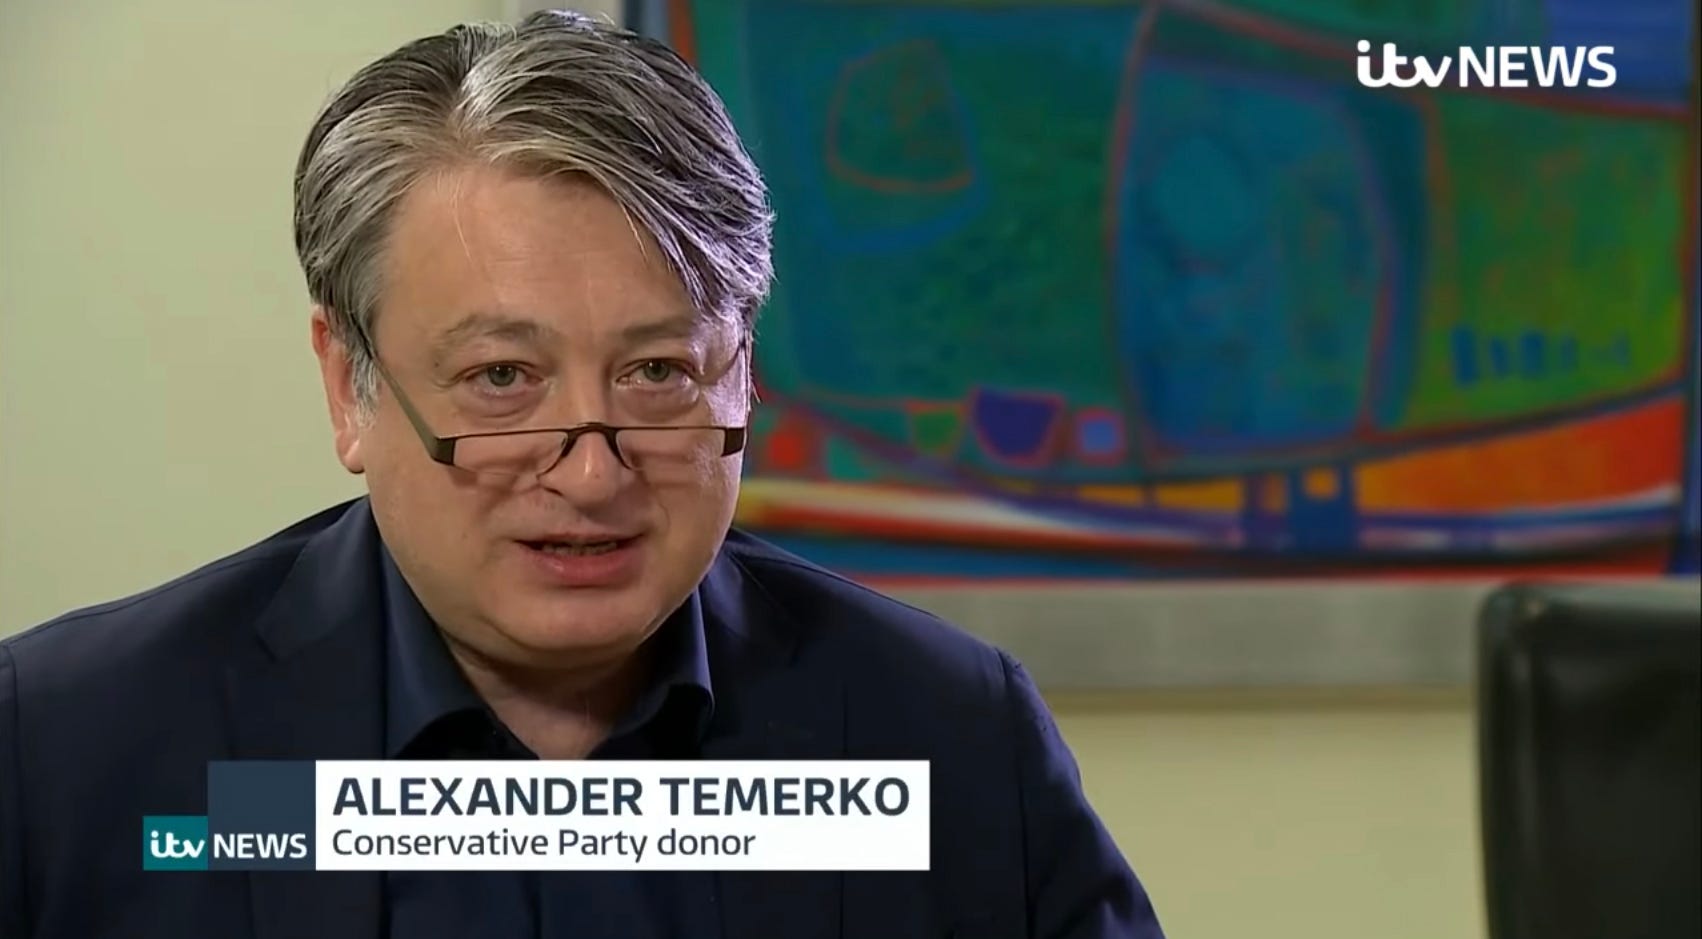 Alexander Temerko giving a TV interview in 2020